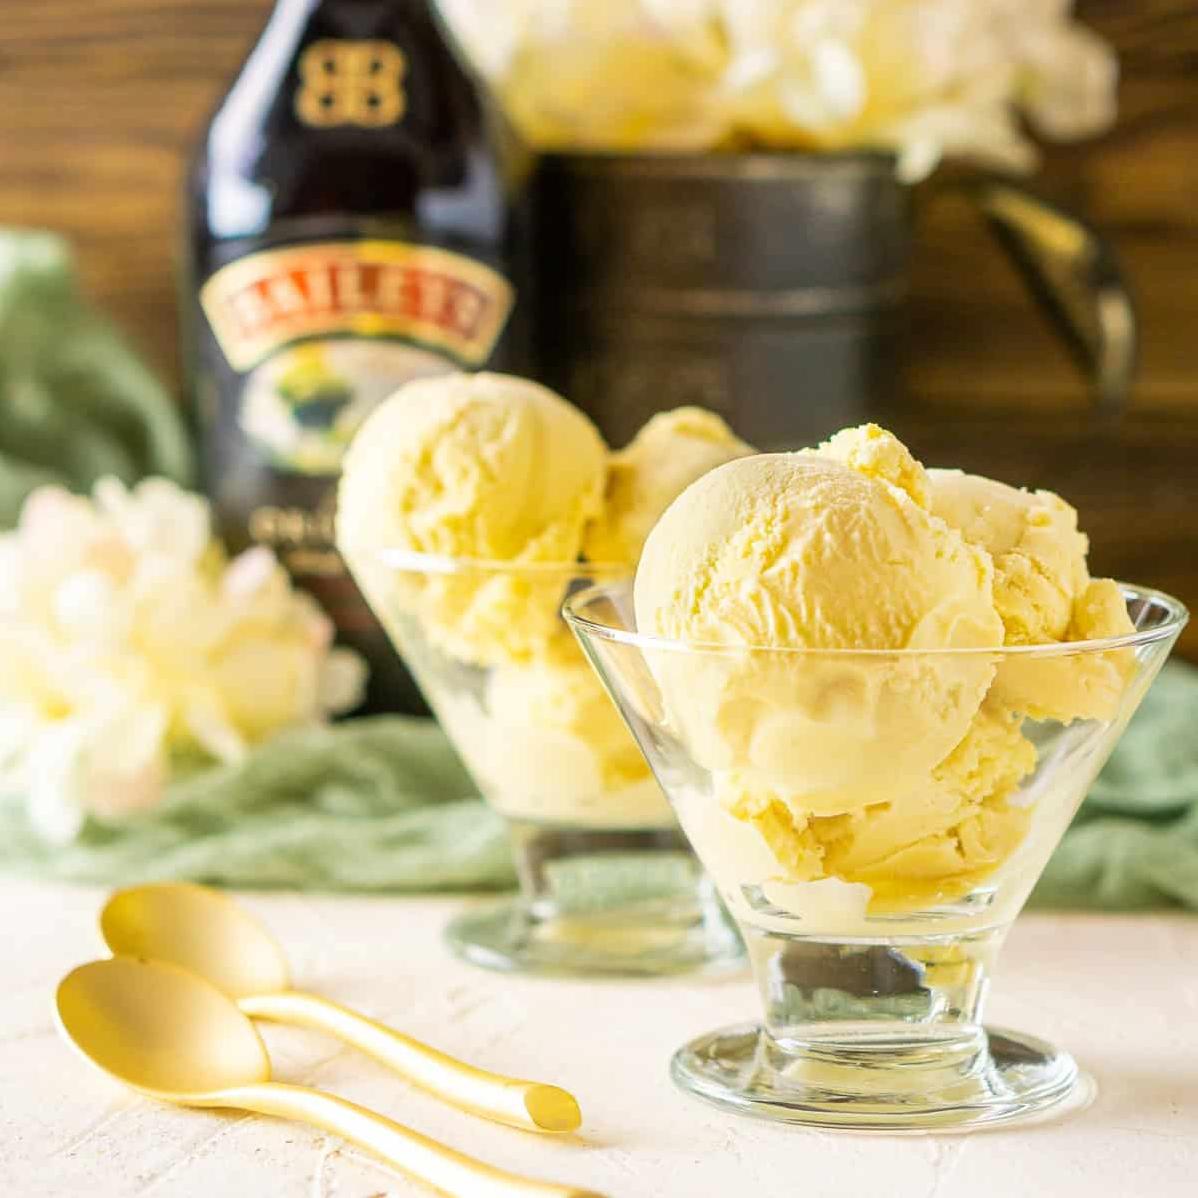  Indulge in a scoop (or two!) of Baileys Irish Cream ice cream.